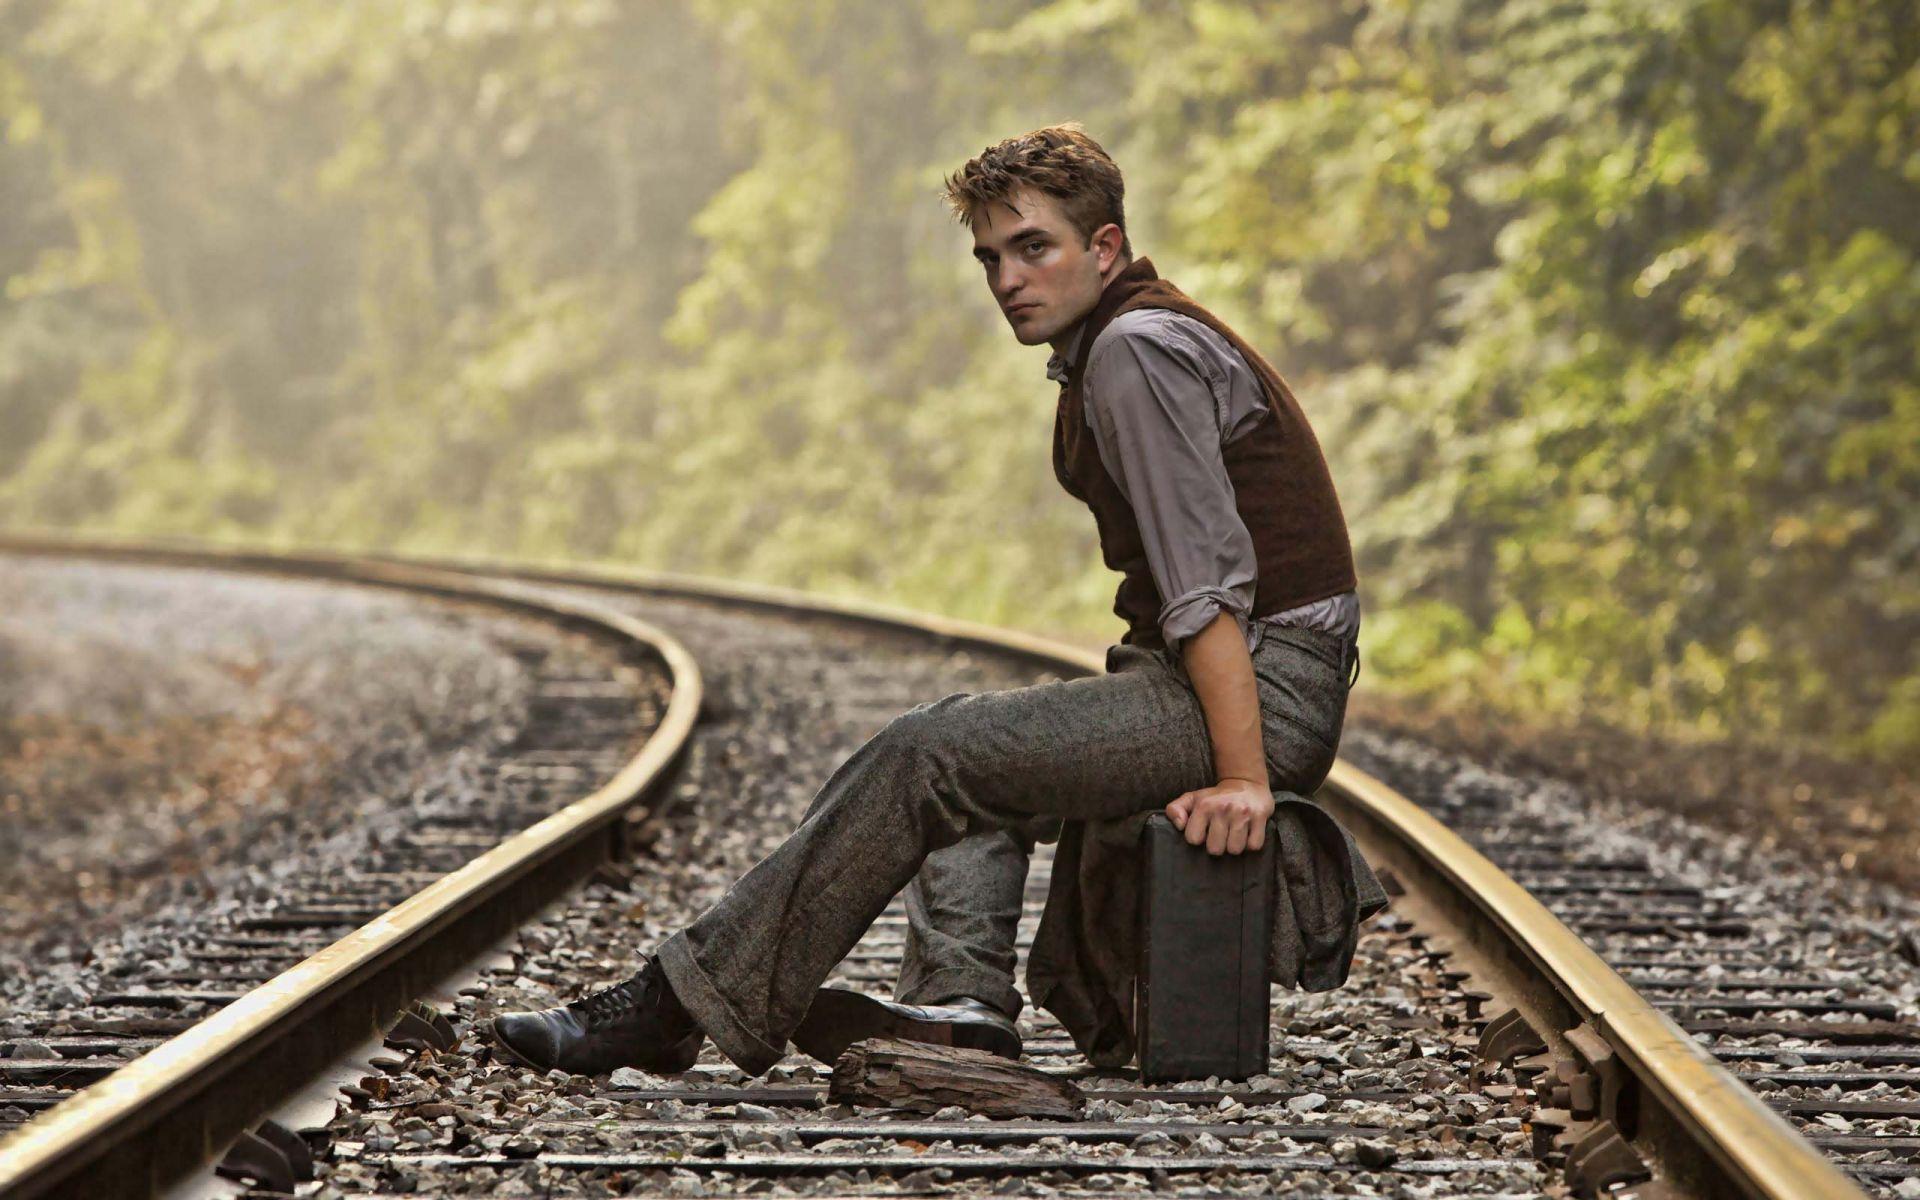 Robert Pattinson Sitting on a Railway Track. HD Hollywood Actors